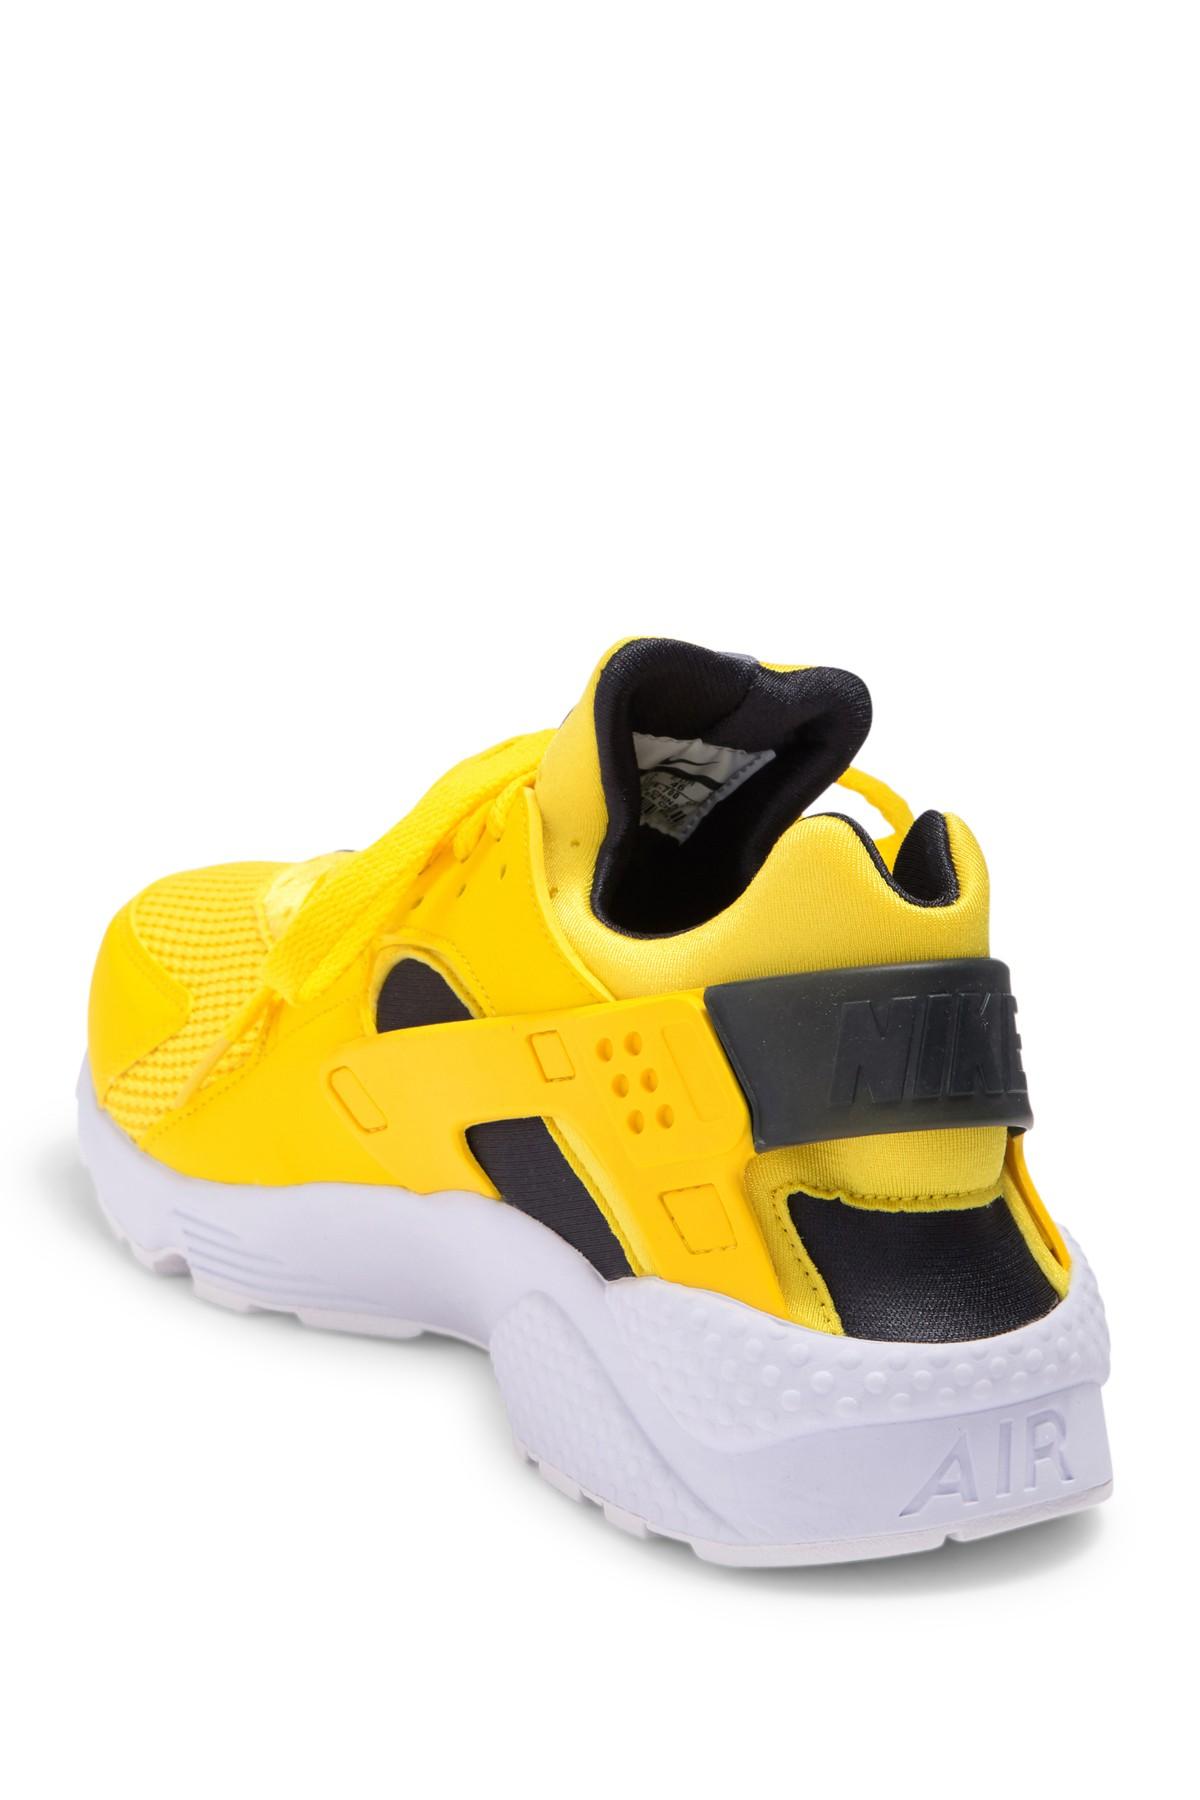 Nike Neoprene Air Huarache Run in Yellow for Men - Lyst